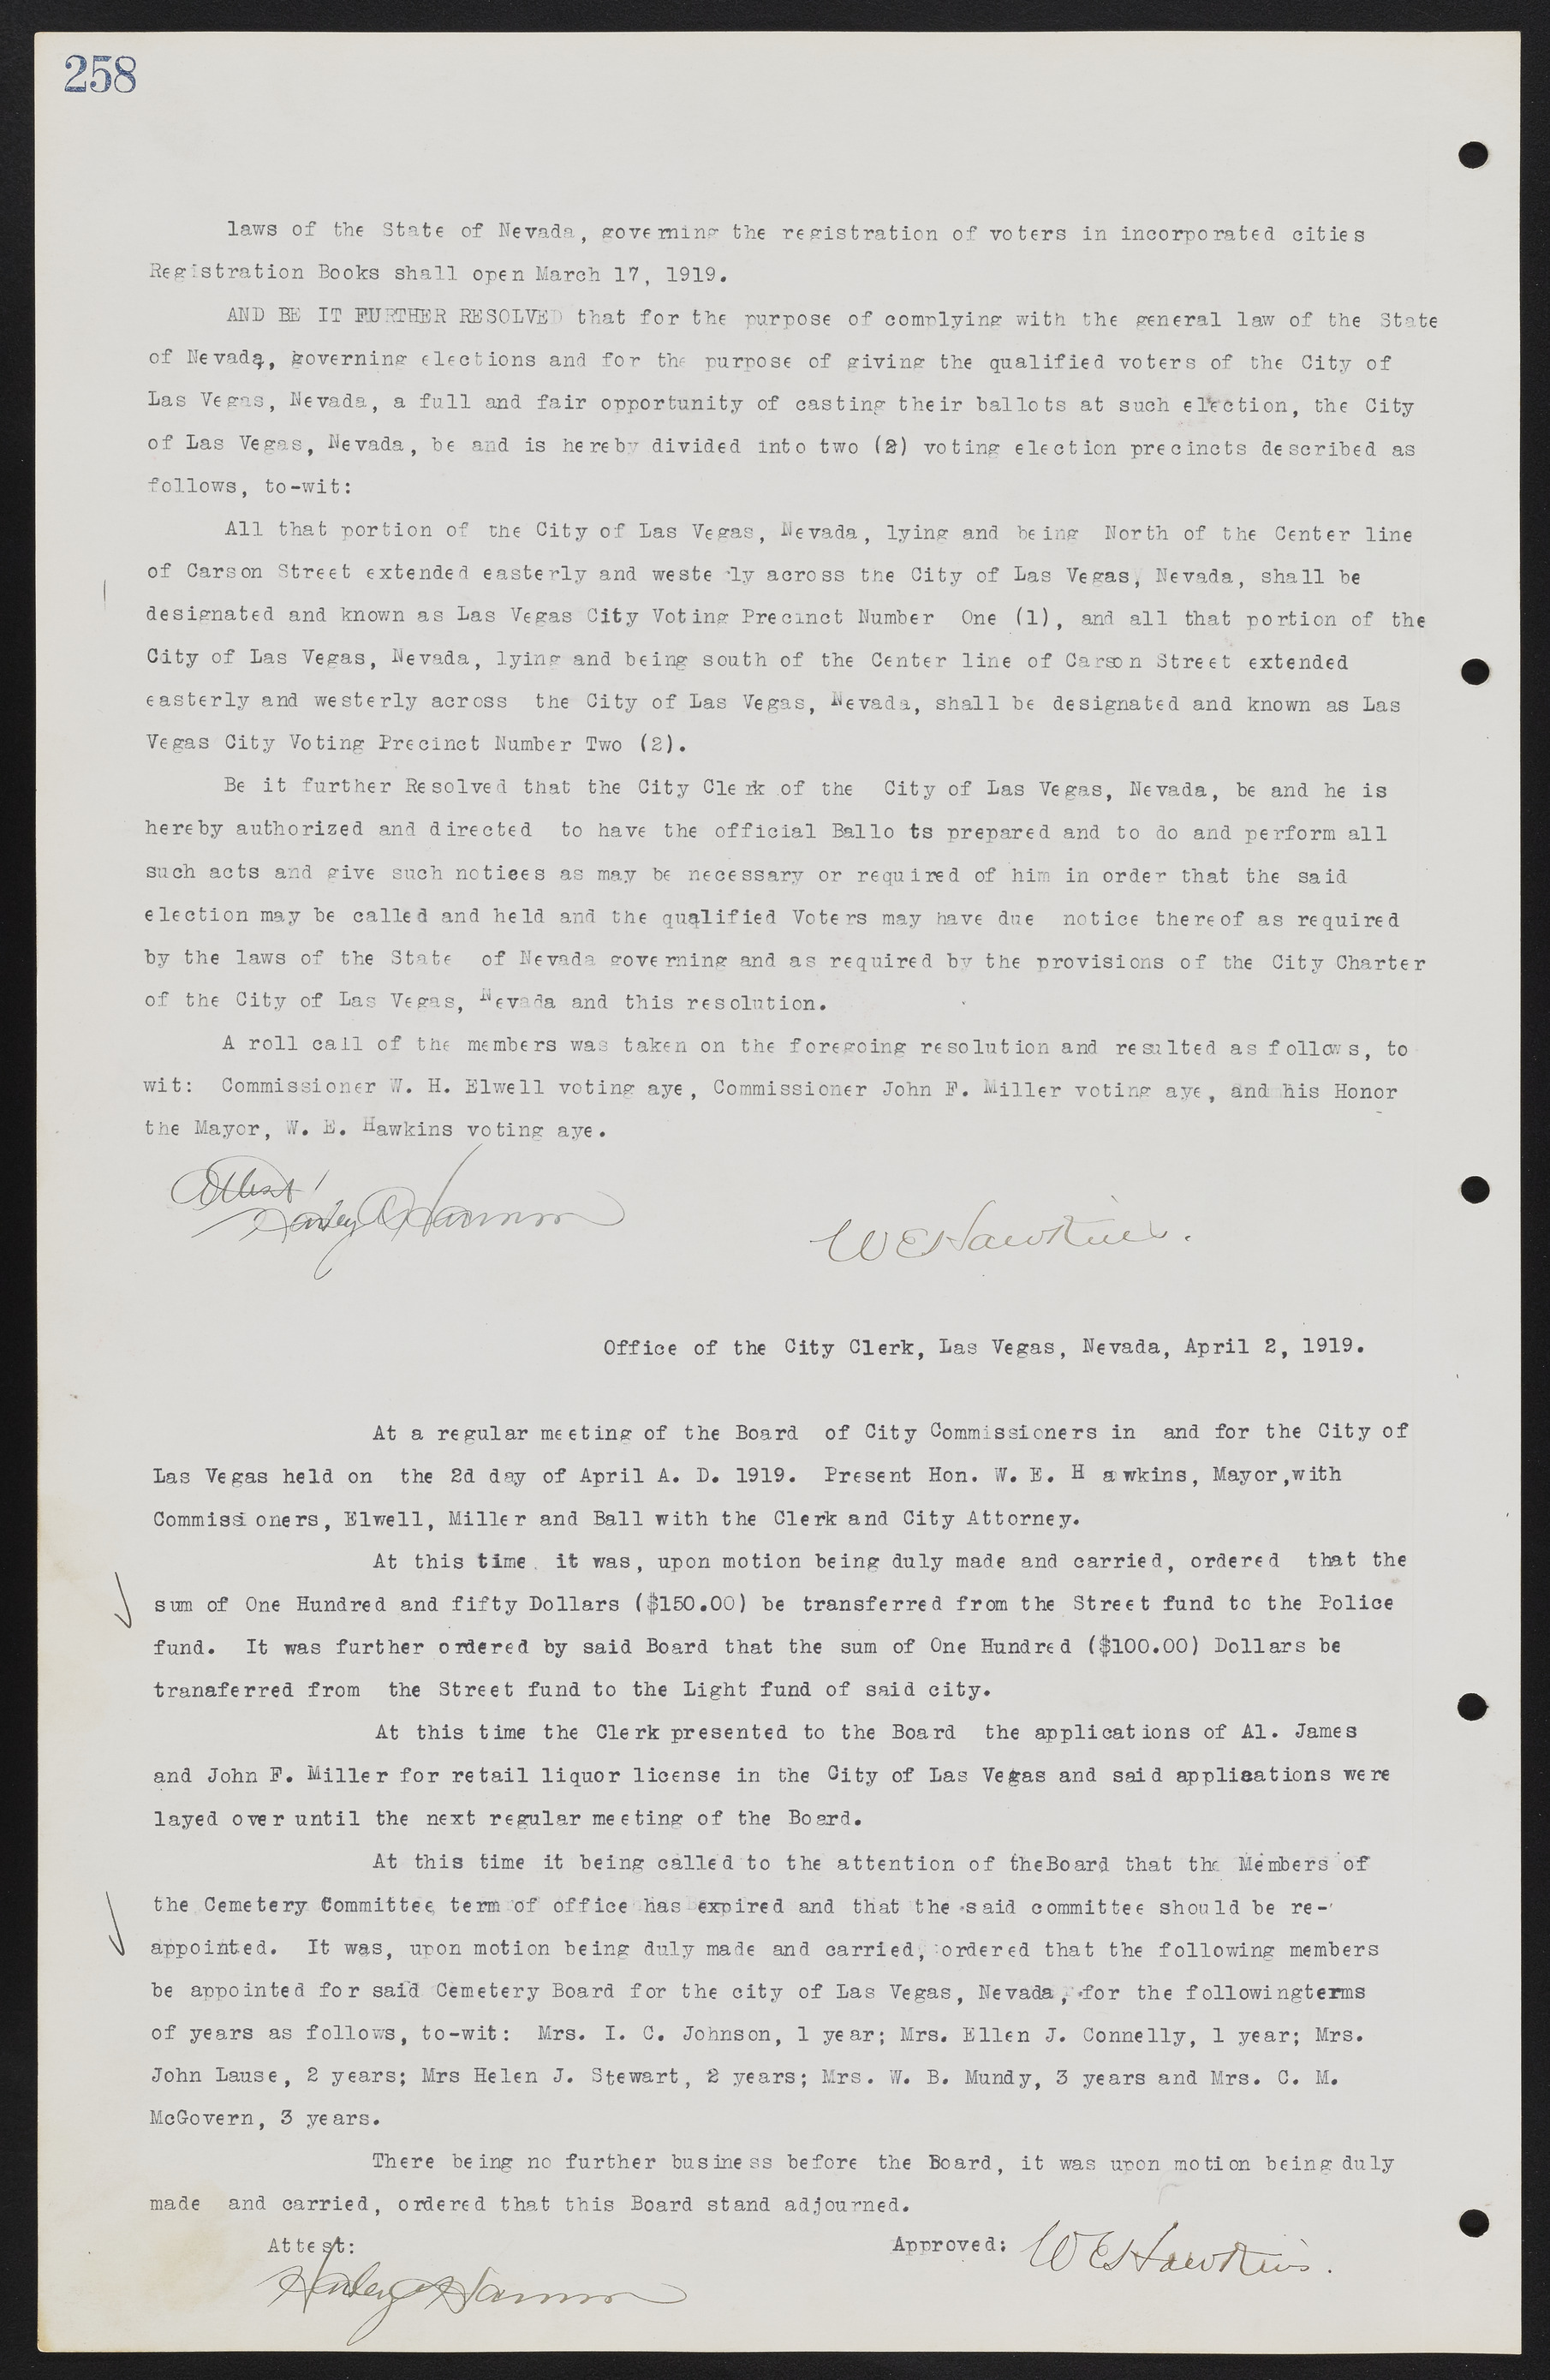 Las Vegas City Commission Minutes, June 22, 1911 to February 7, 1922, lvc000001-274